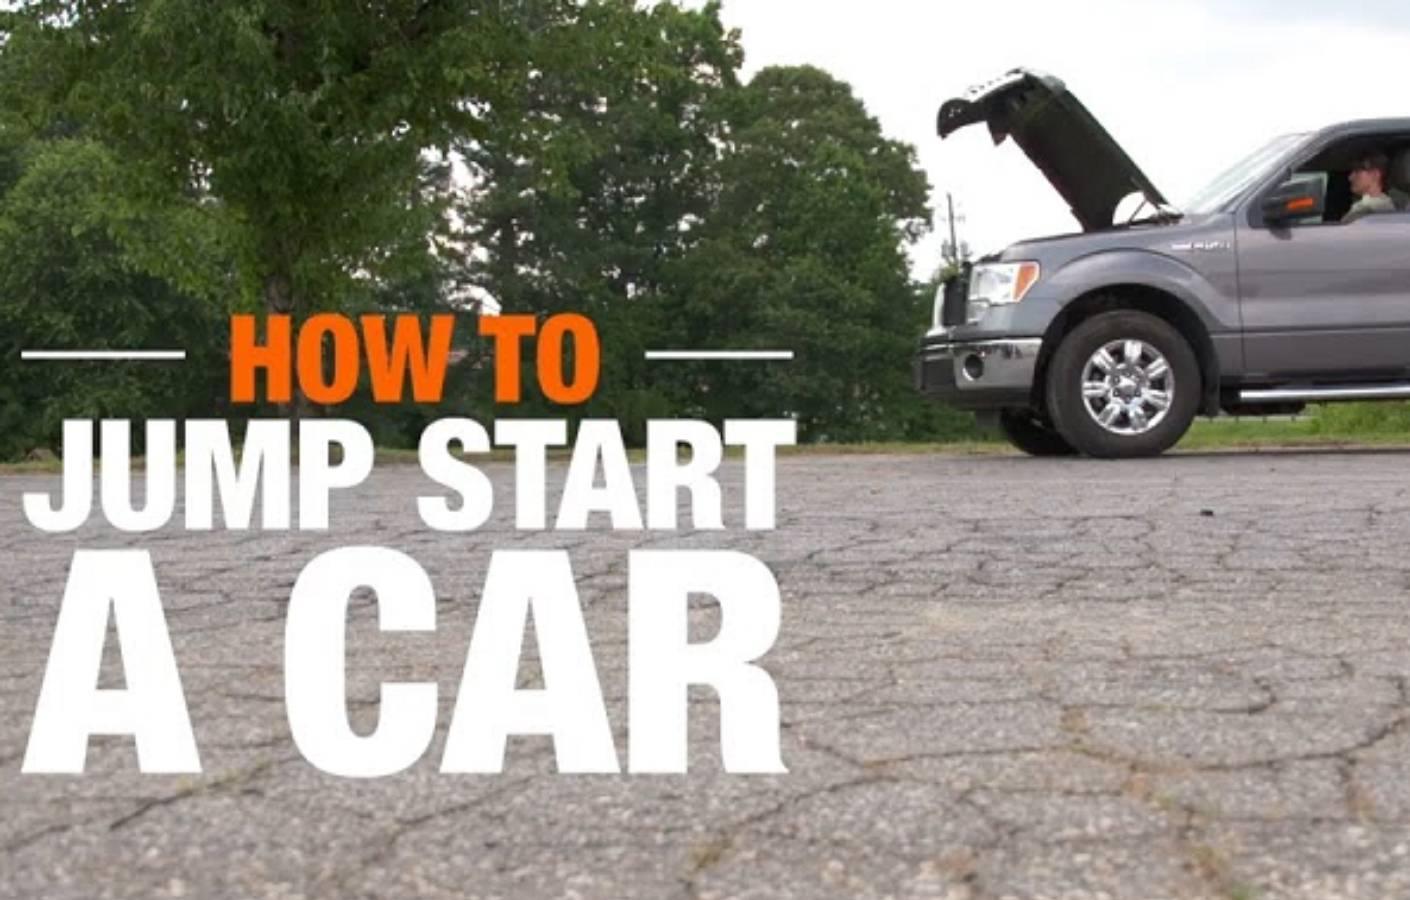 How to Jump start a car - Lokithorshop